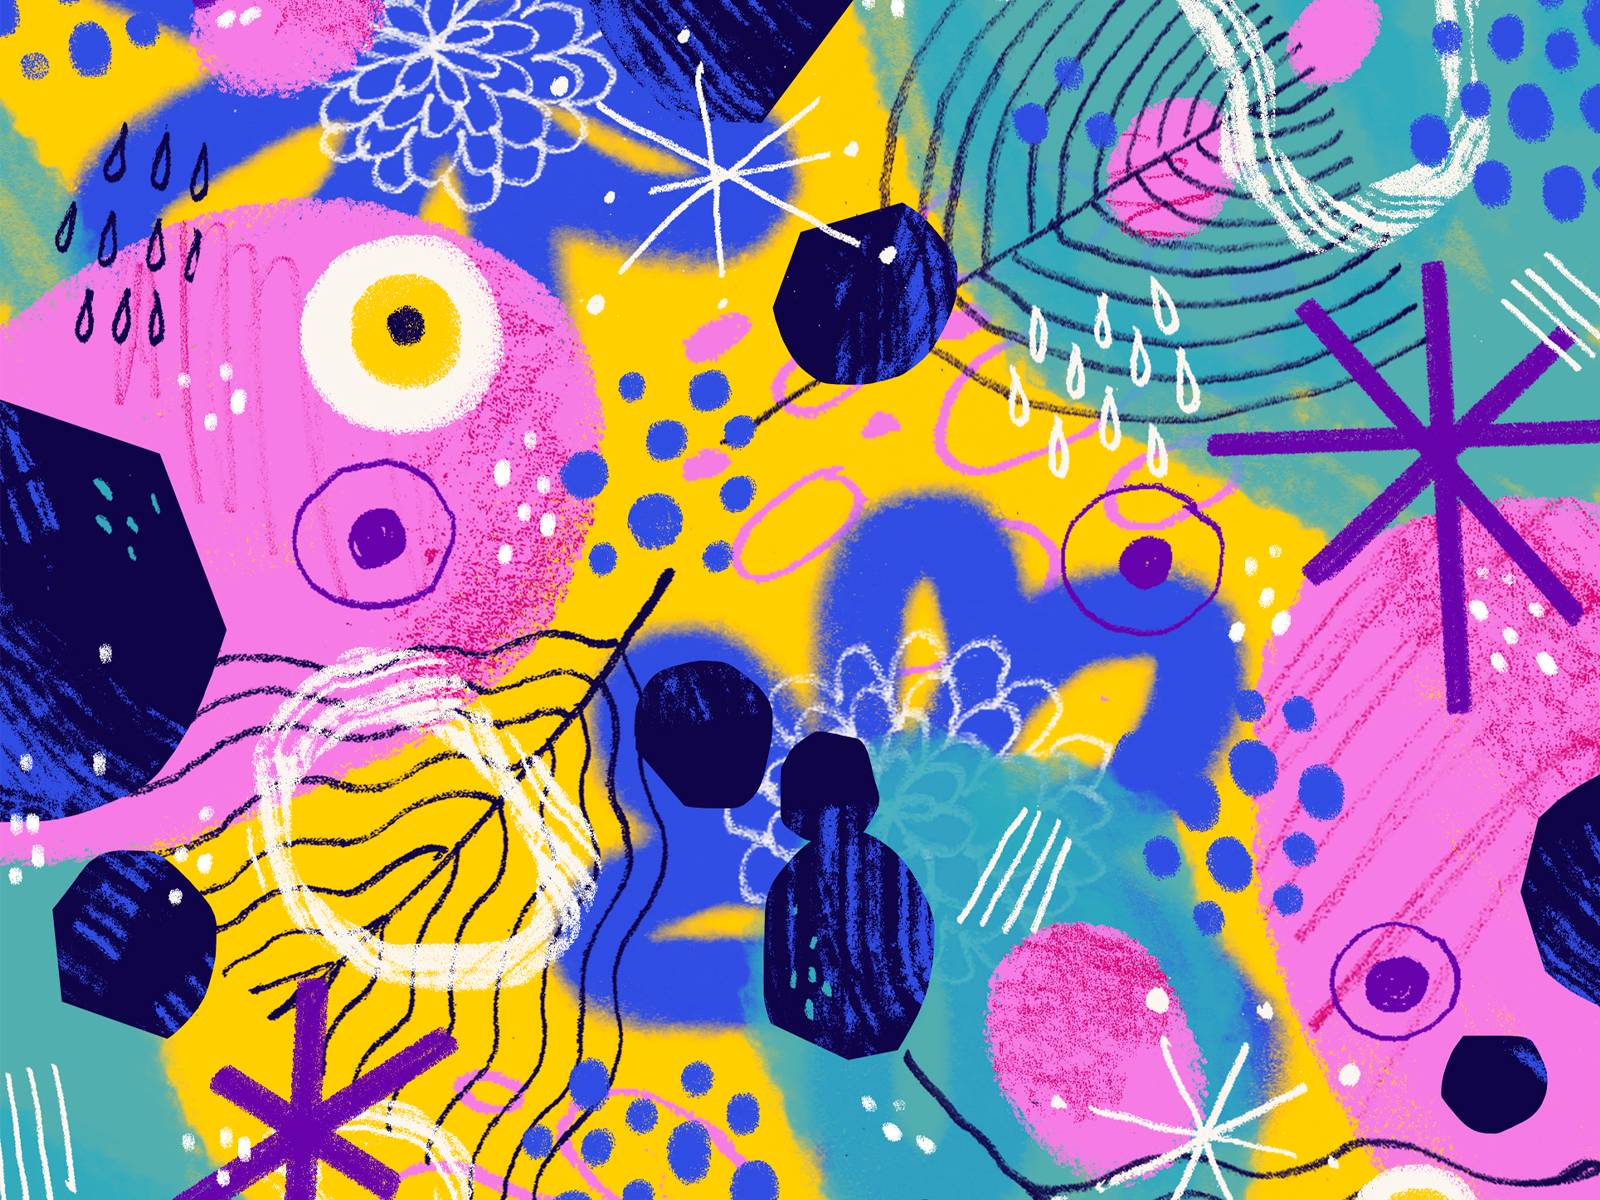 YEiLY - Brisa de Mar - Texture latino artwork illustration flowers abstract pattern texture